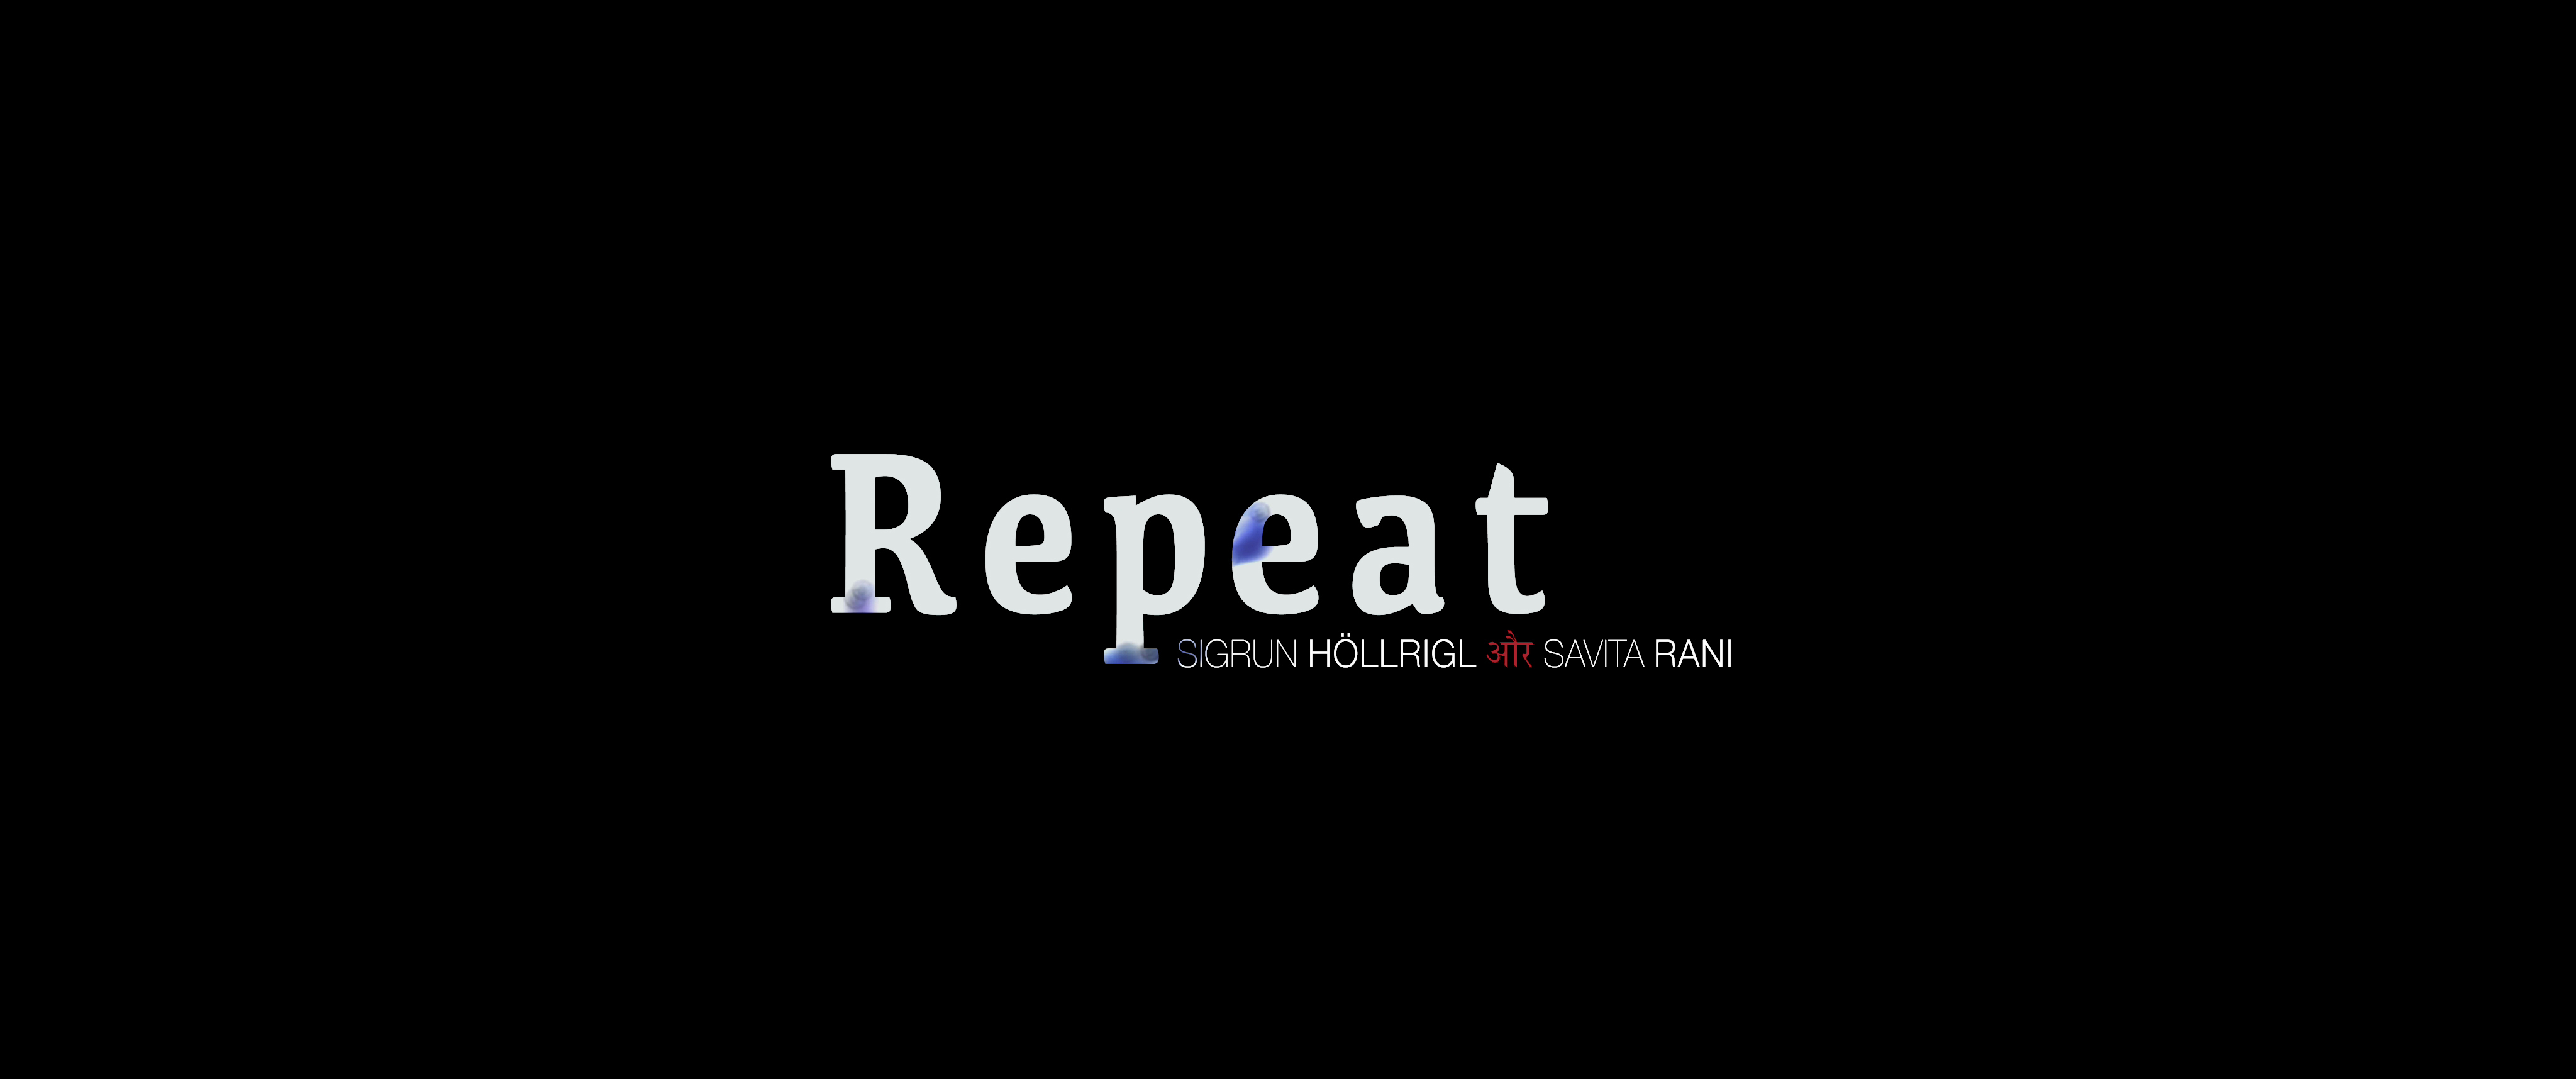 Repeat (Still) - by Mersolis Schöne with Sigrun Höllrigl, Savita Rani, Christian Reiner, Apollina Smaragd, Michael Fischer